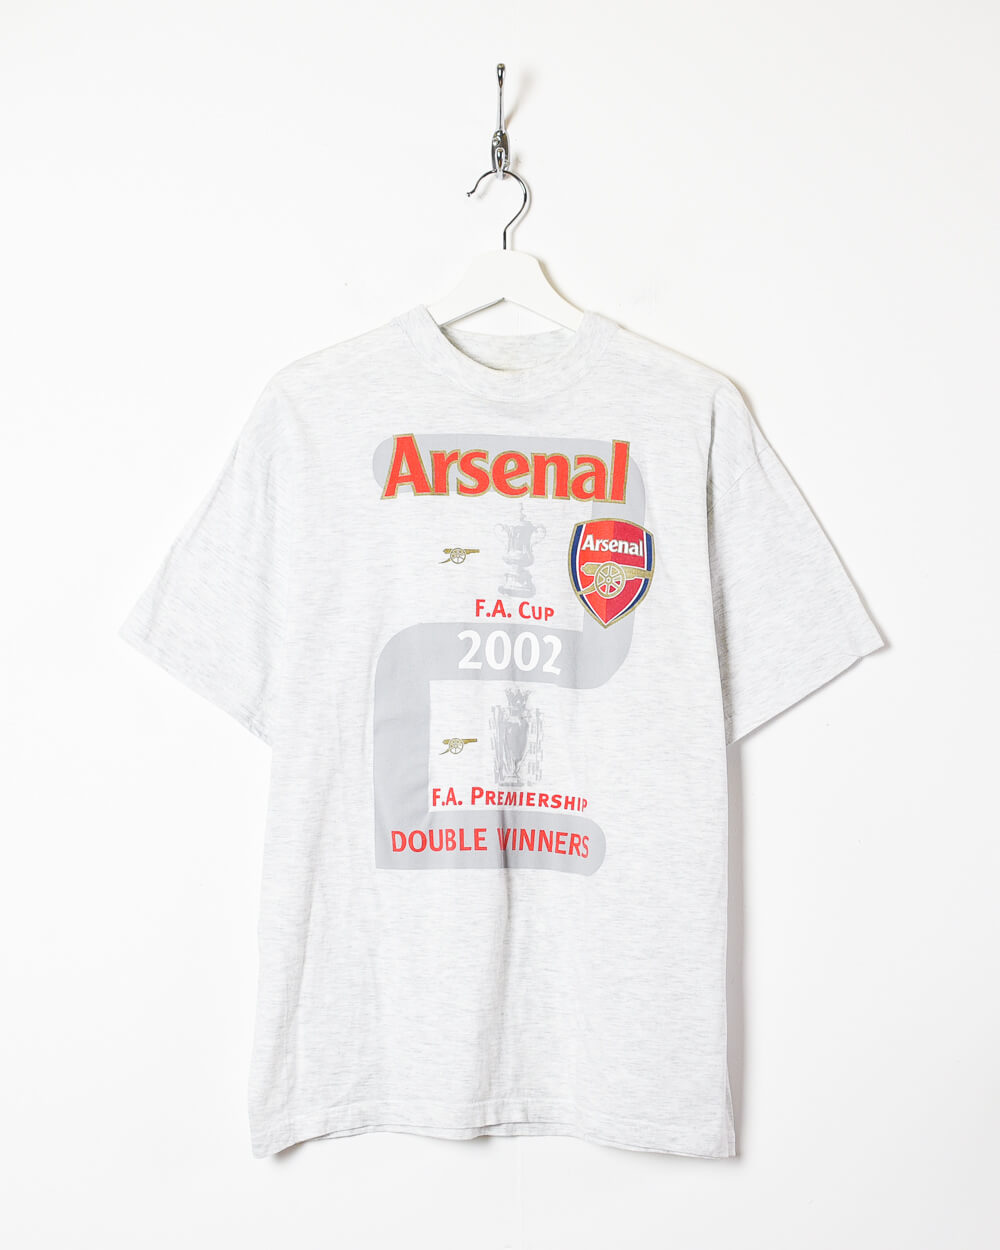 Stone Arsenal F.A. Cup T-Shirt - Medium